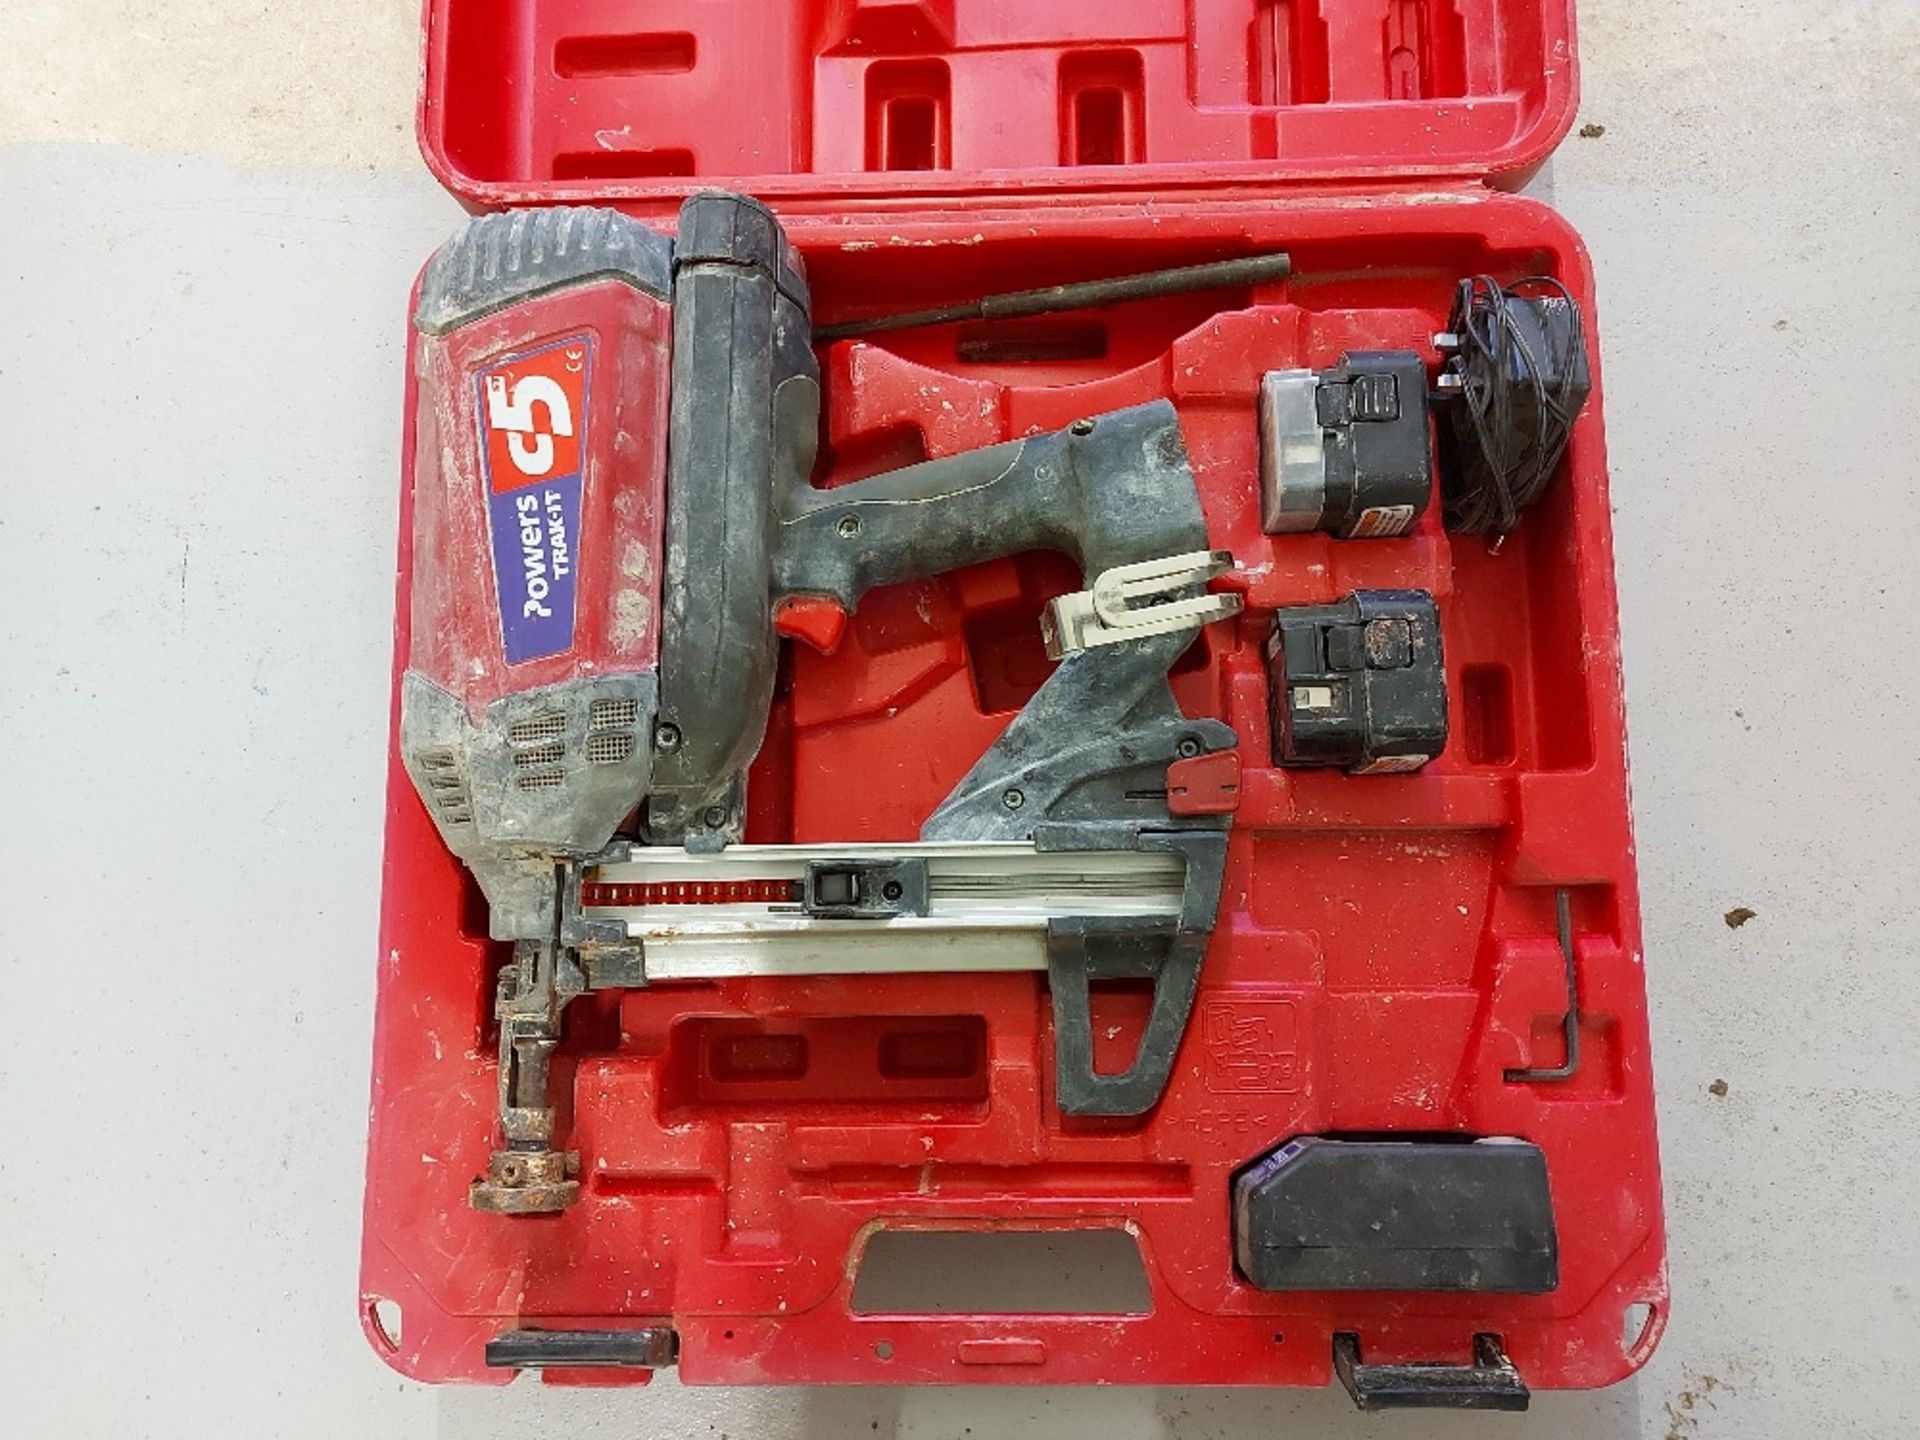 Powers Trak-It Gas Fixing Tool (Nail Gun)